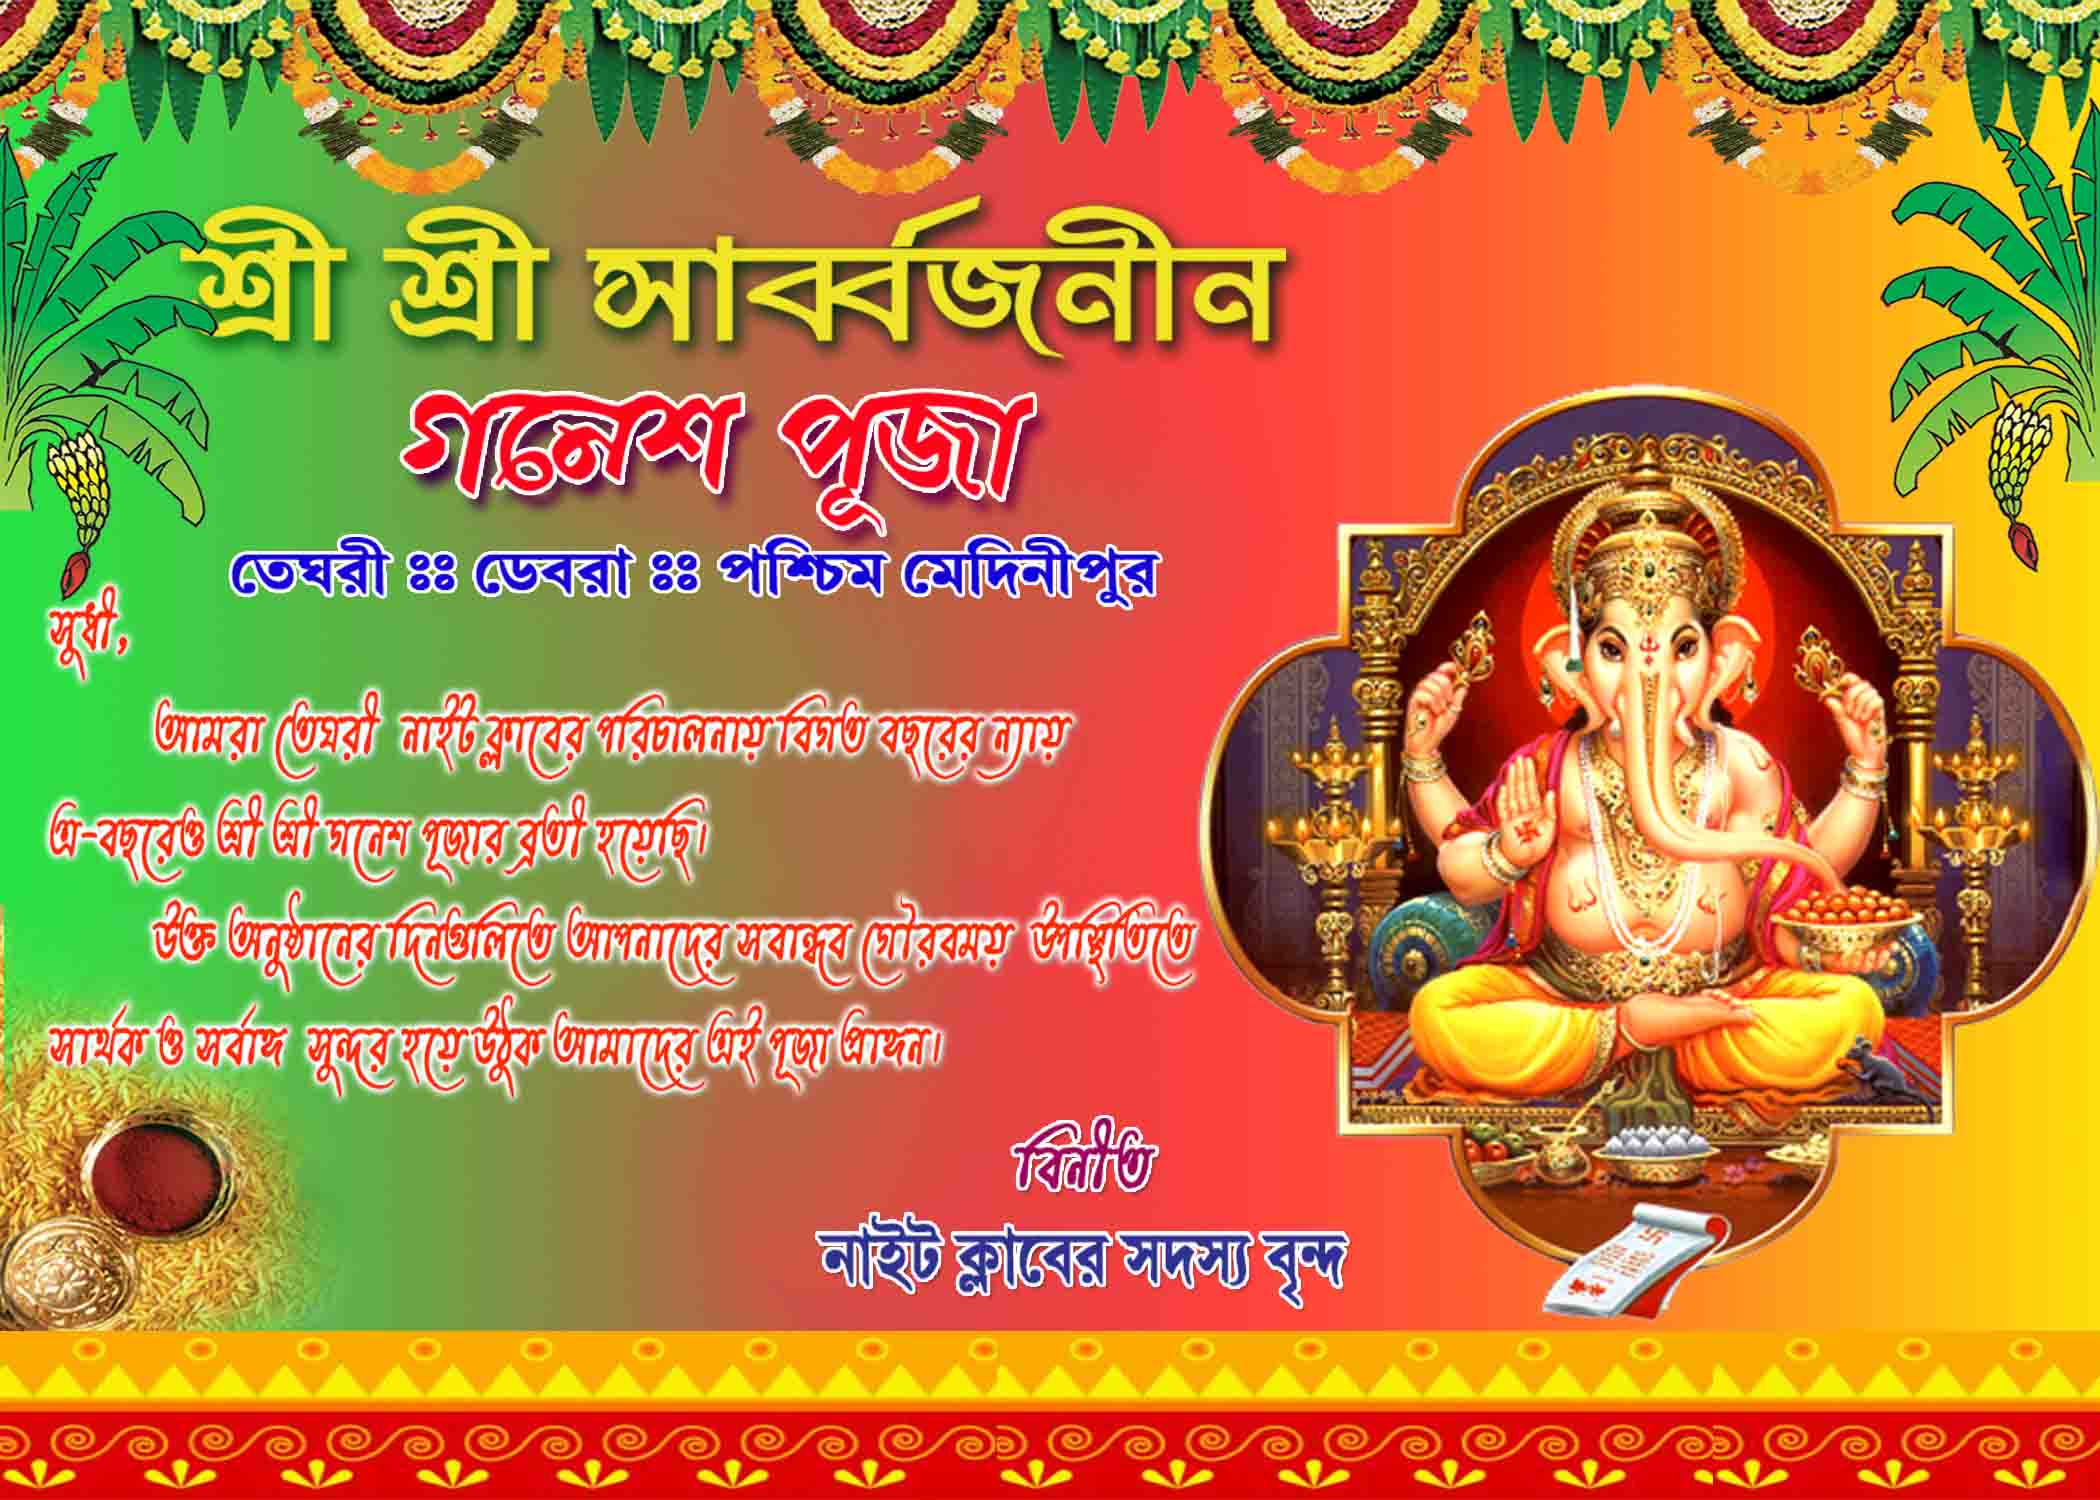  Durga Puja Invitation Card In Bengali 2017 invacation1st.org